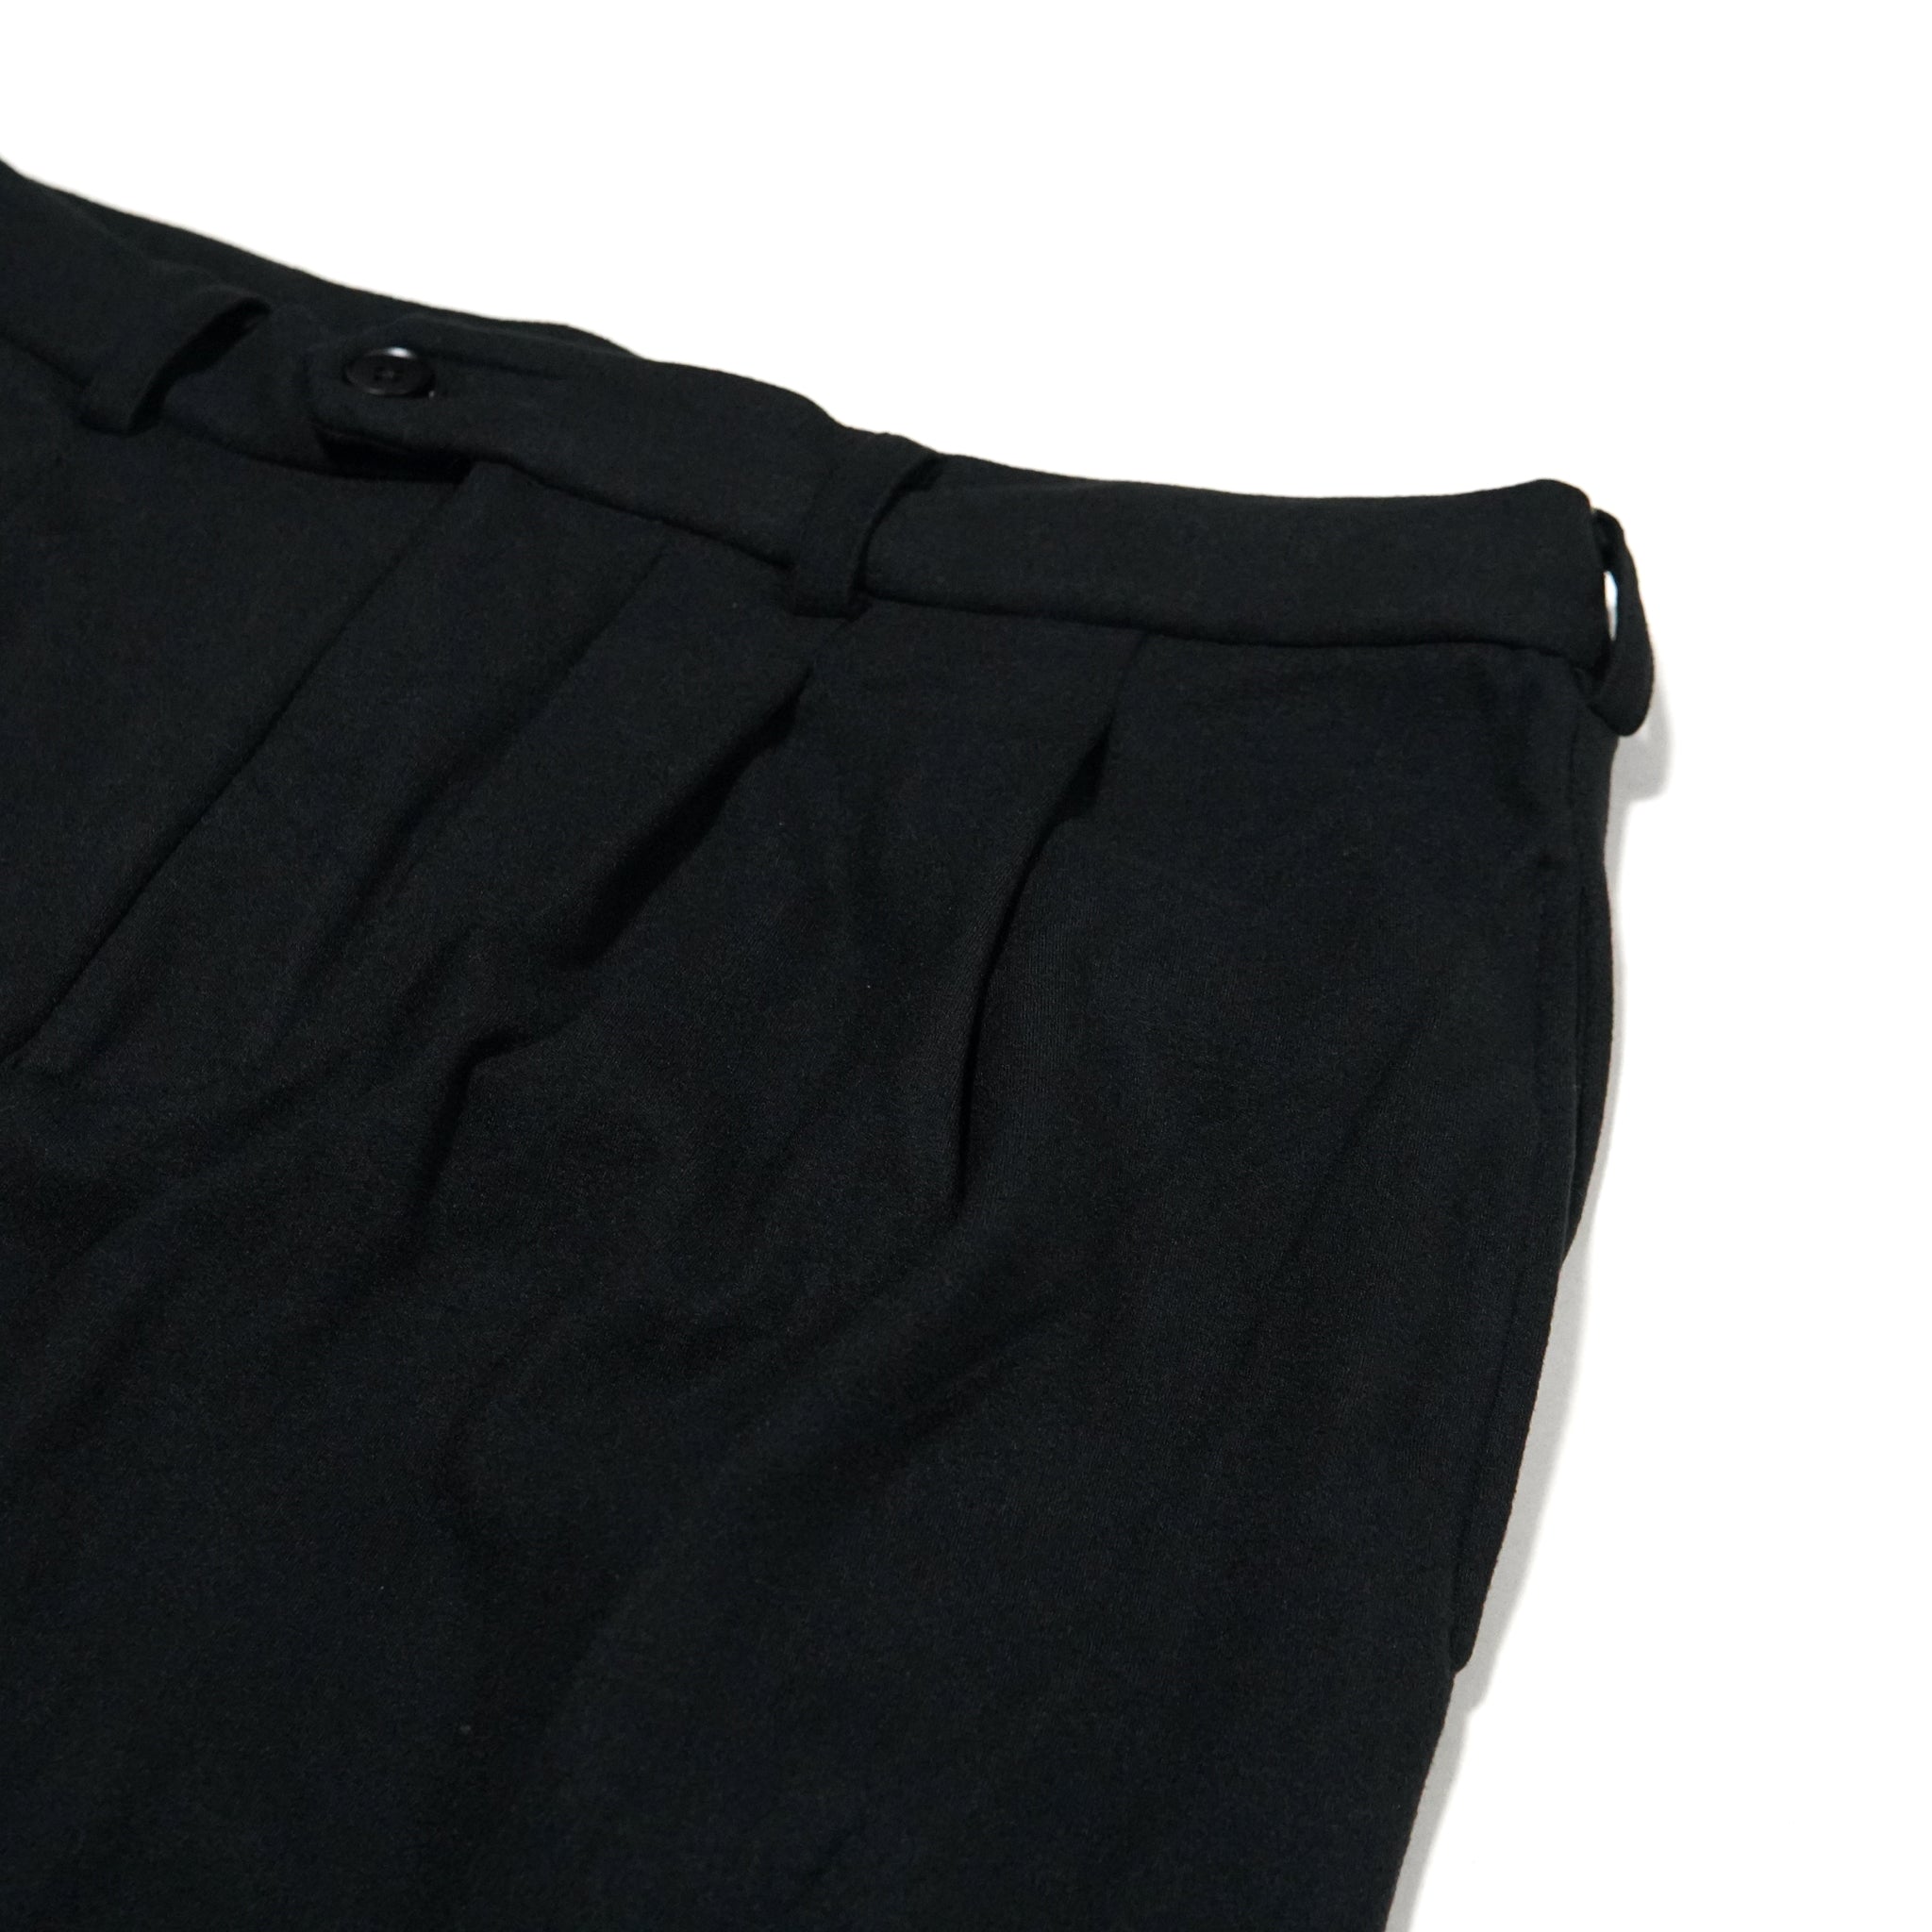 No:m-2303857 | Name:Cut&Sewn Tuck Pants【ADDICTION別注】| Color:Chacoal/Black【MODEM DESIGN_モデムデザイン】